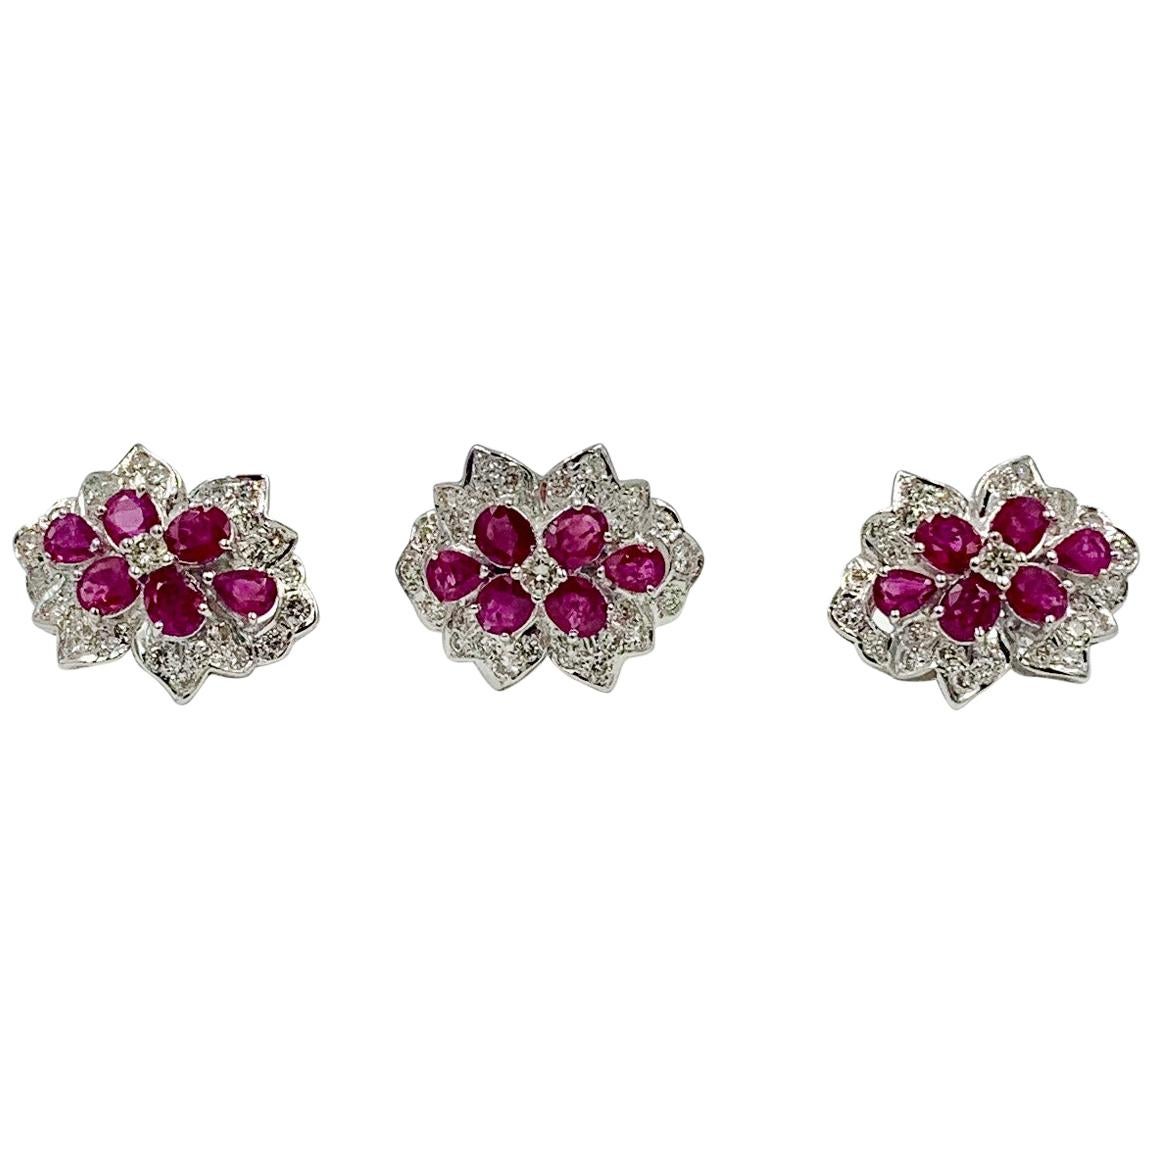 Ruby Diamond Earrings and Ring Set 18 Karat White Gold Parure